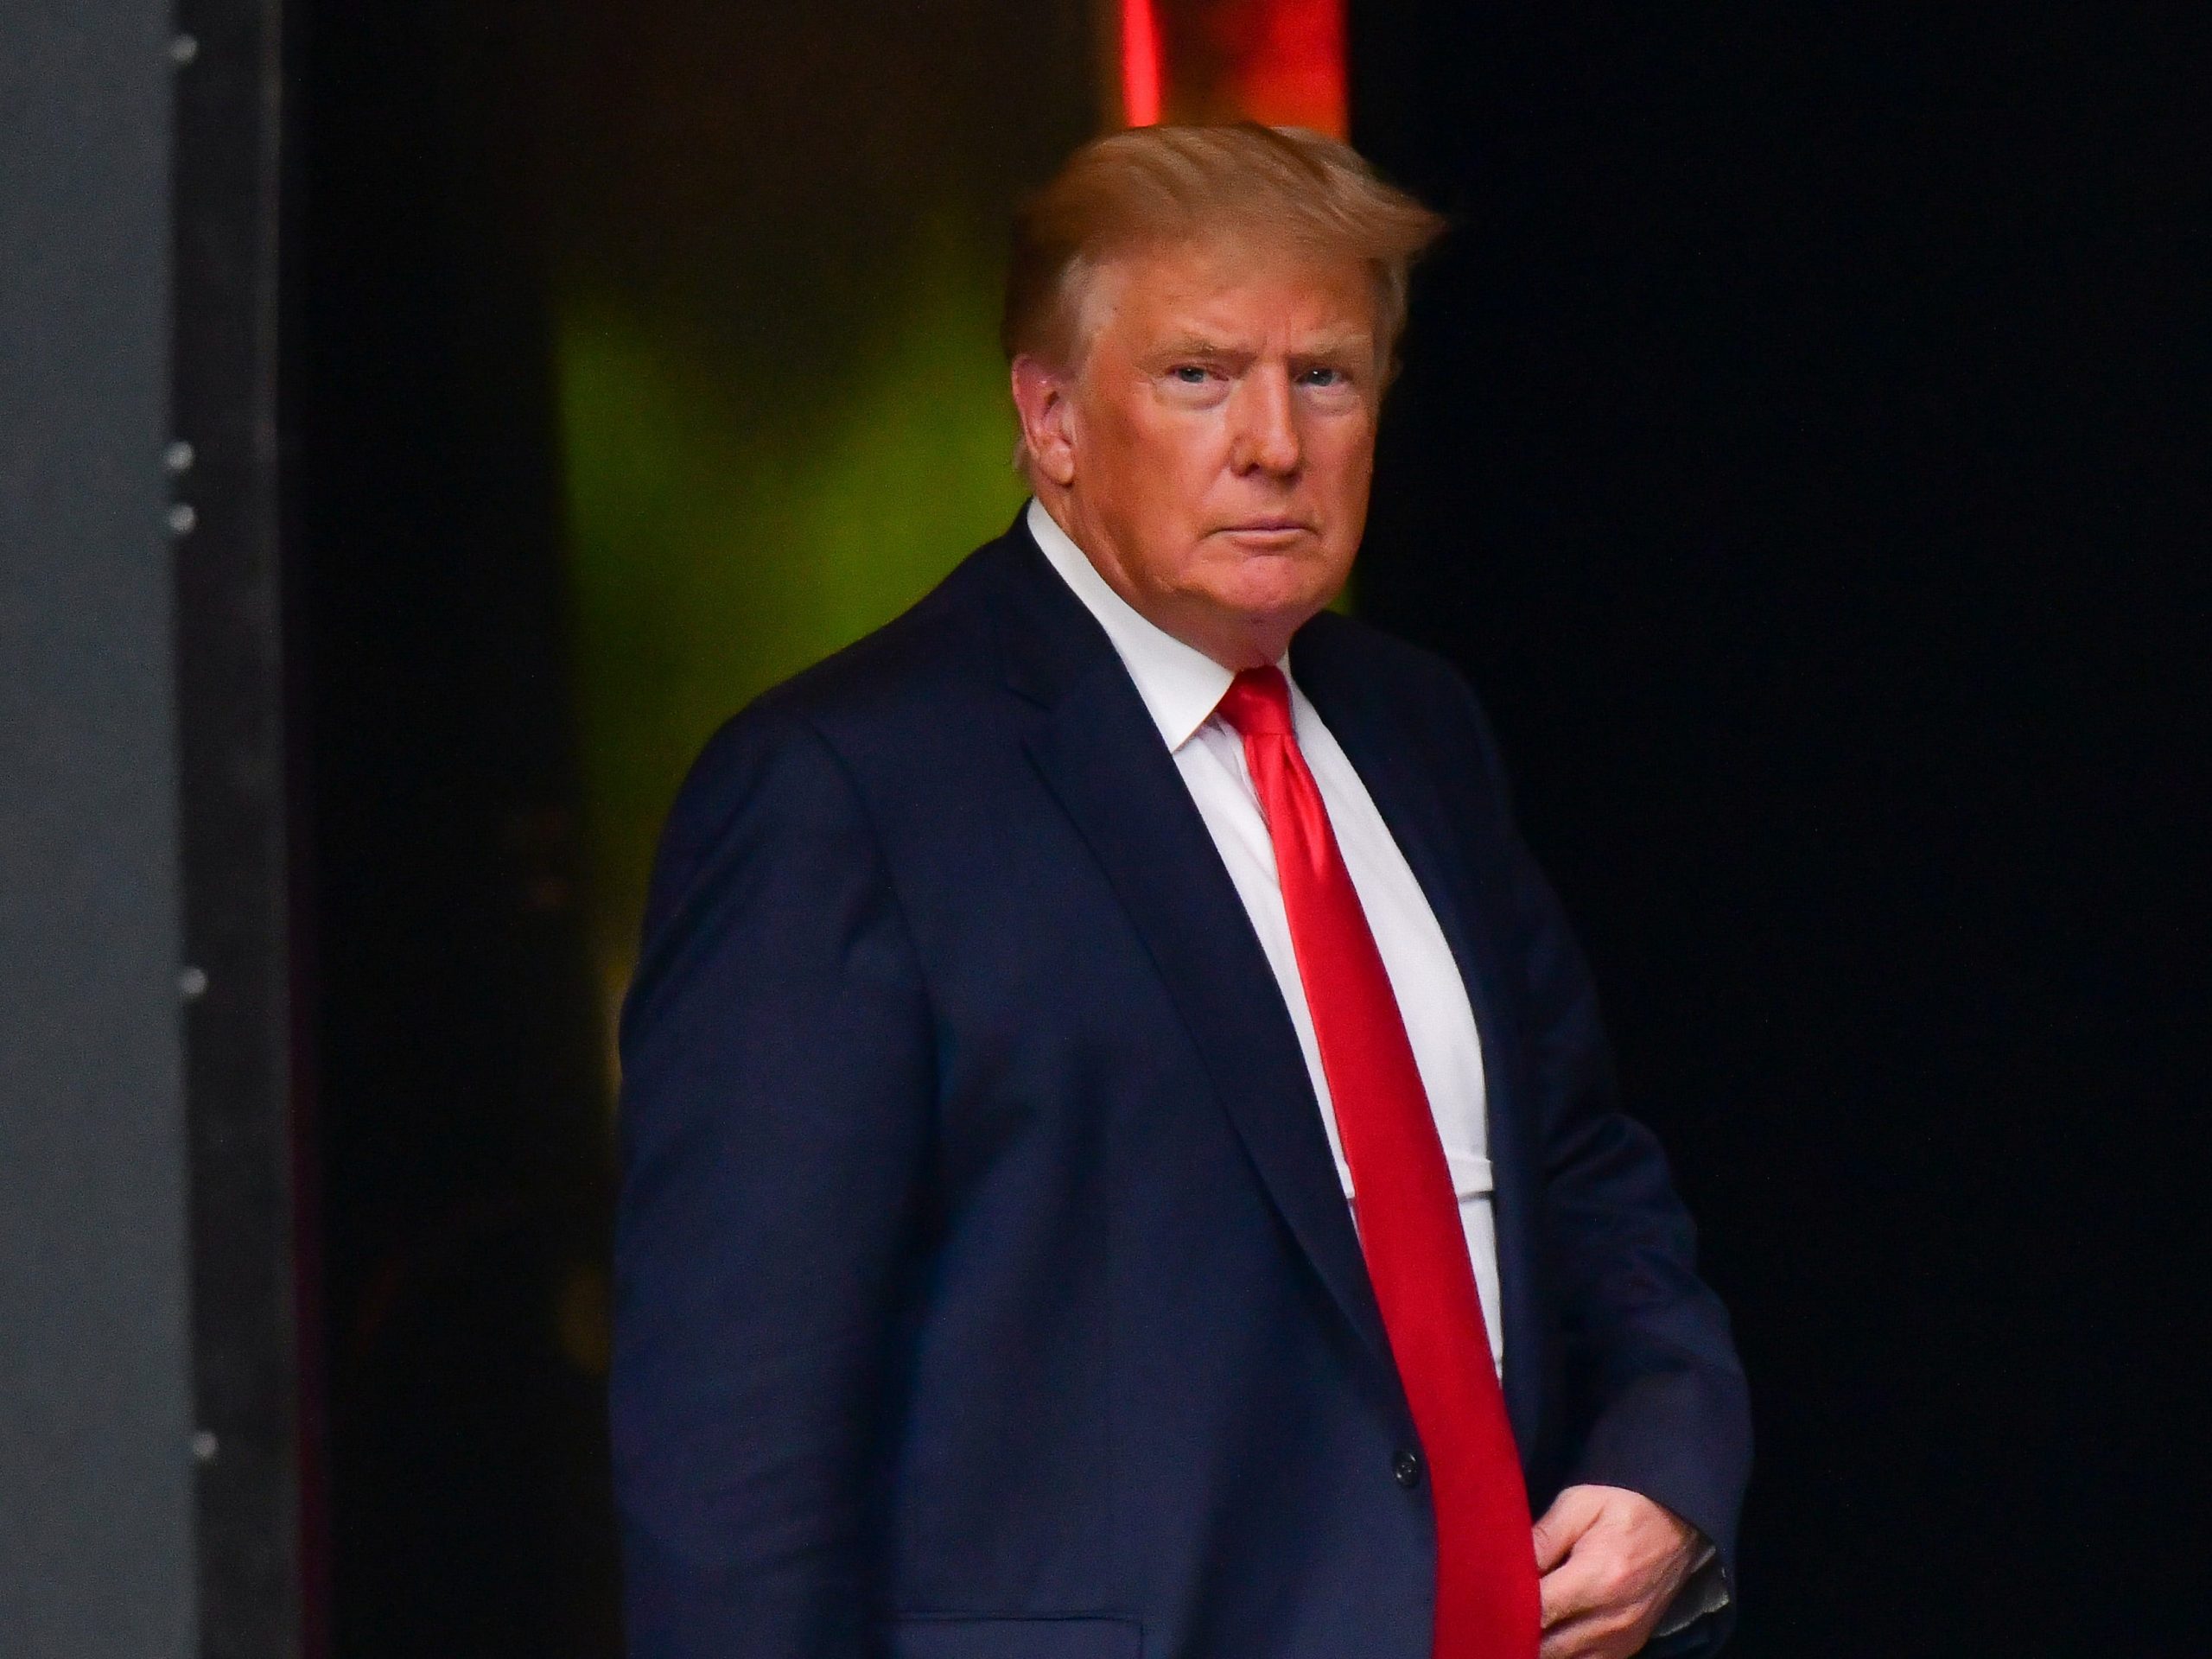 Donald Trump portrait in dark suit and red tie